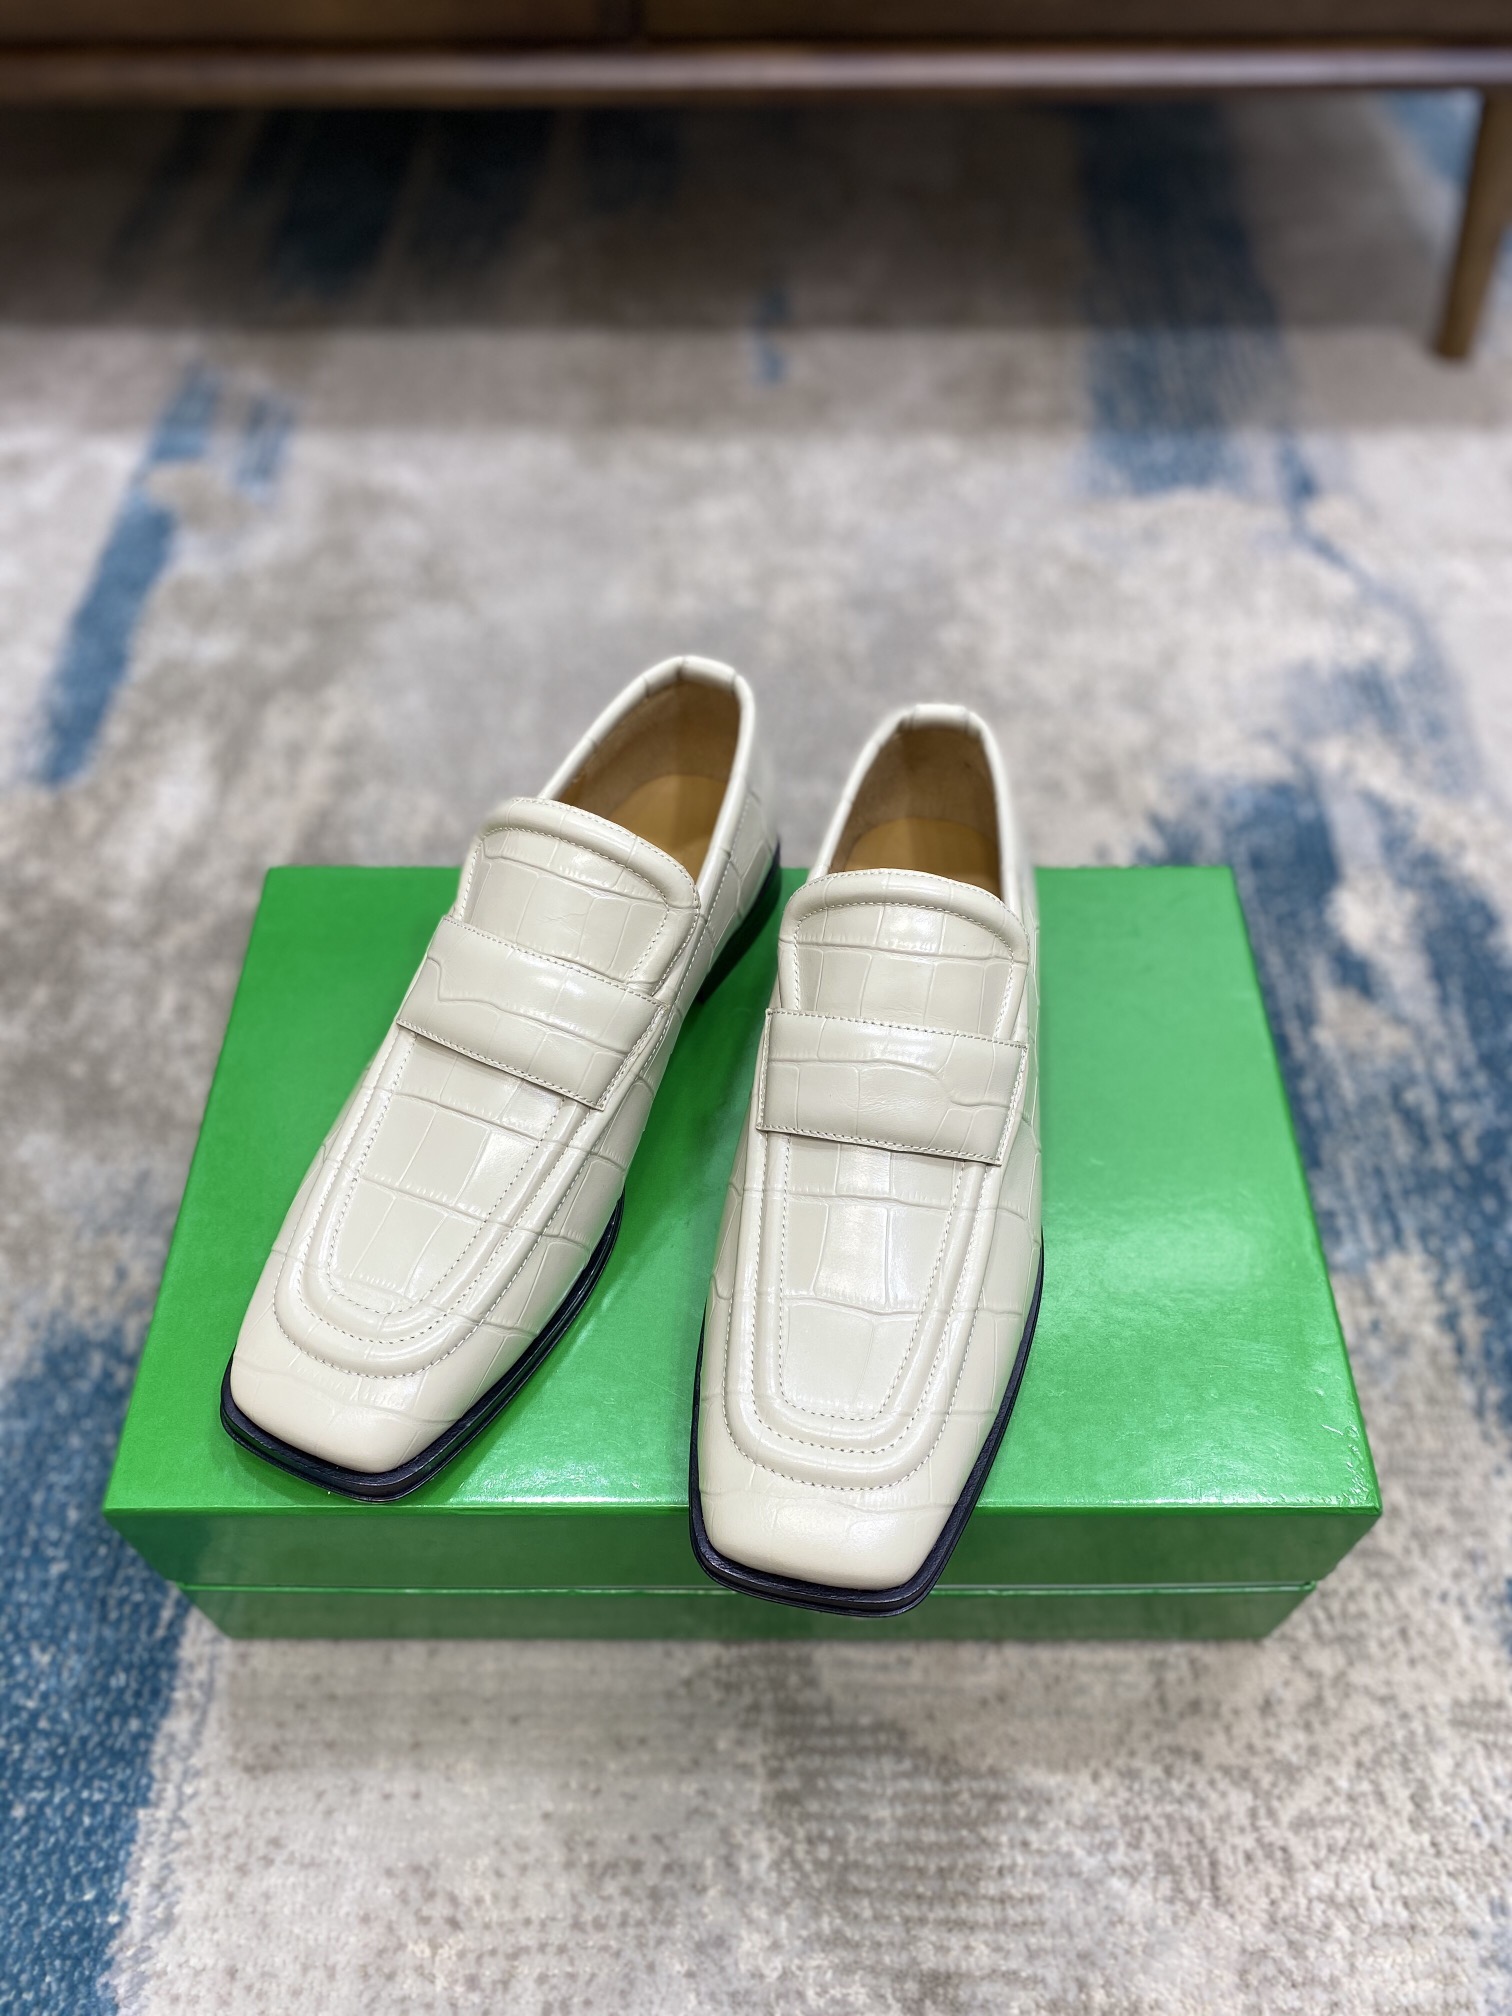 Bottega Veneta Lofer in White Leather shoes